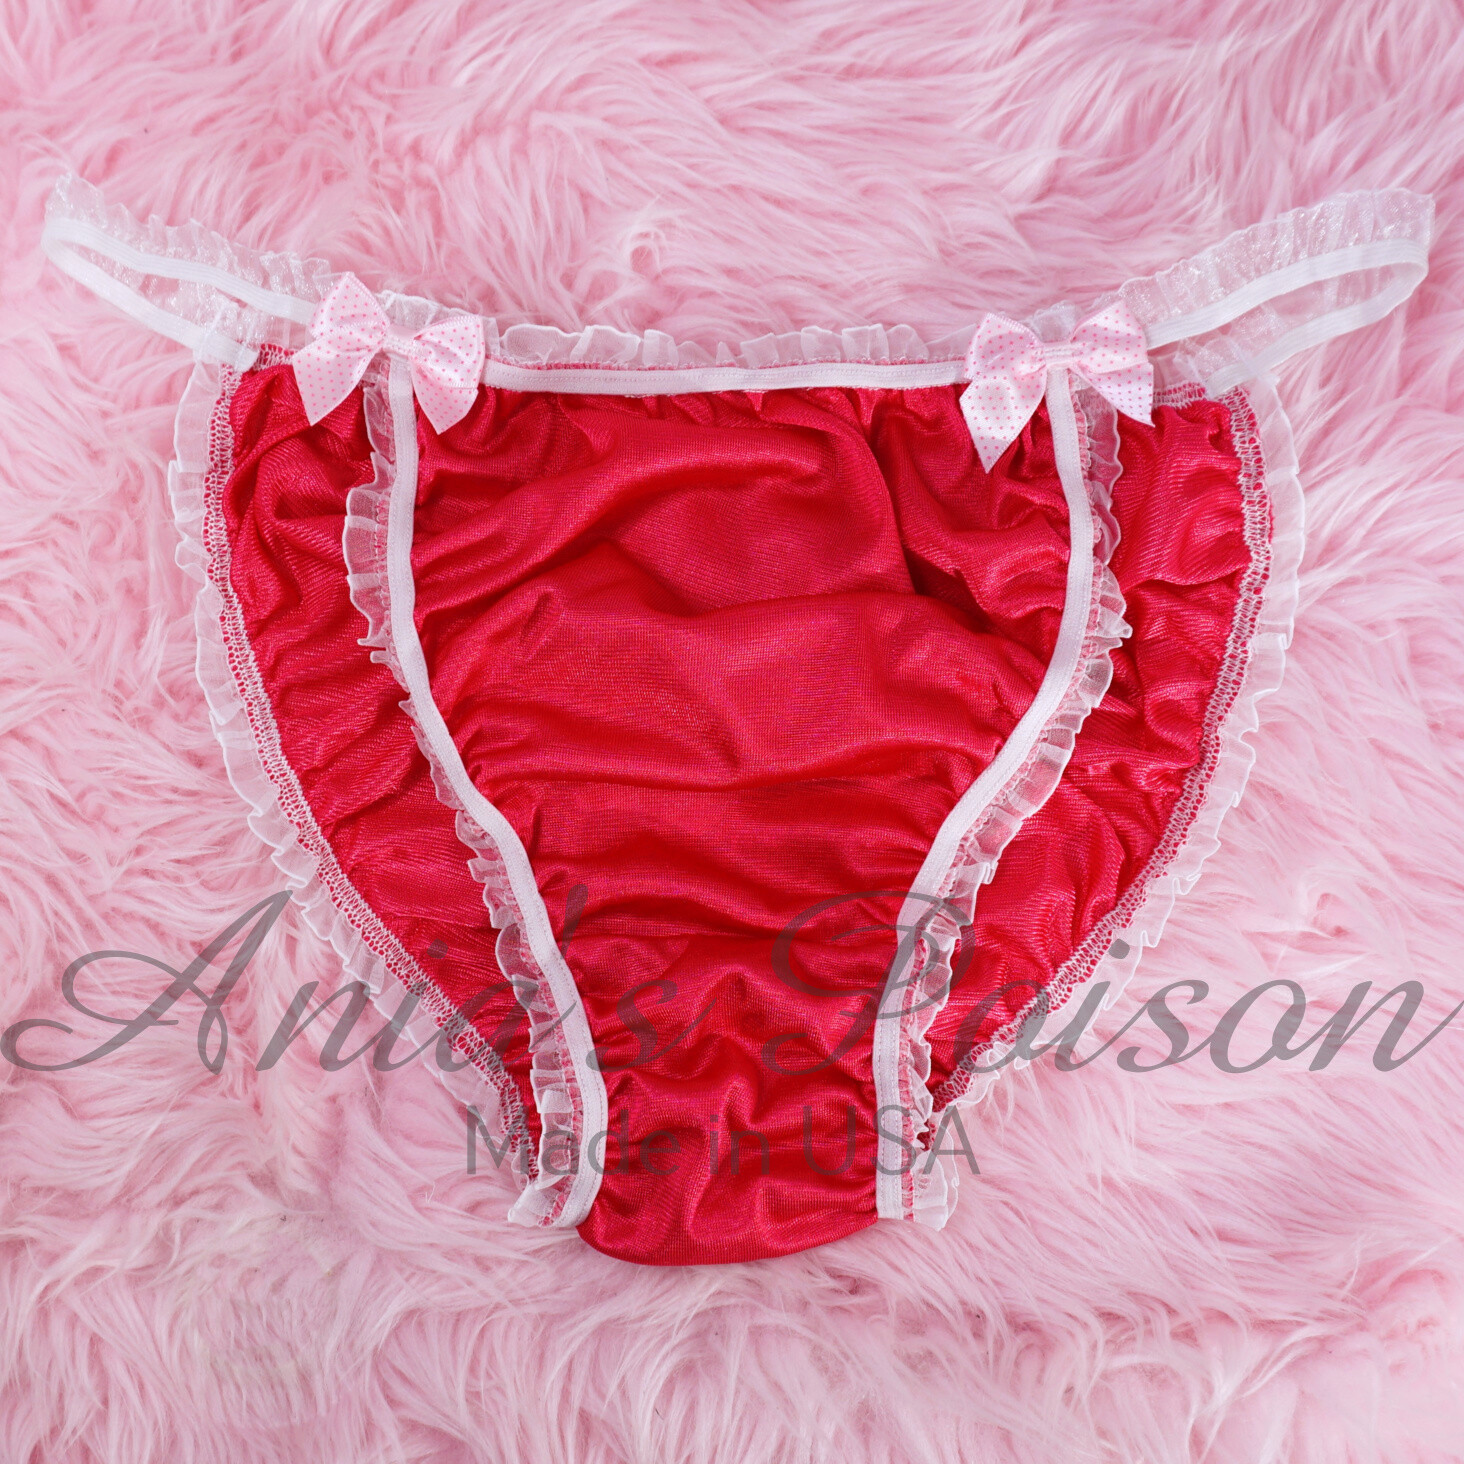 LIMITED Ania's Poison Hot Pink NYLON 100% silky soft string bikini sissy mens underwear panties sz XL ONLY